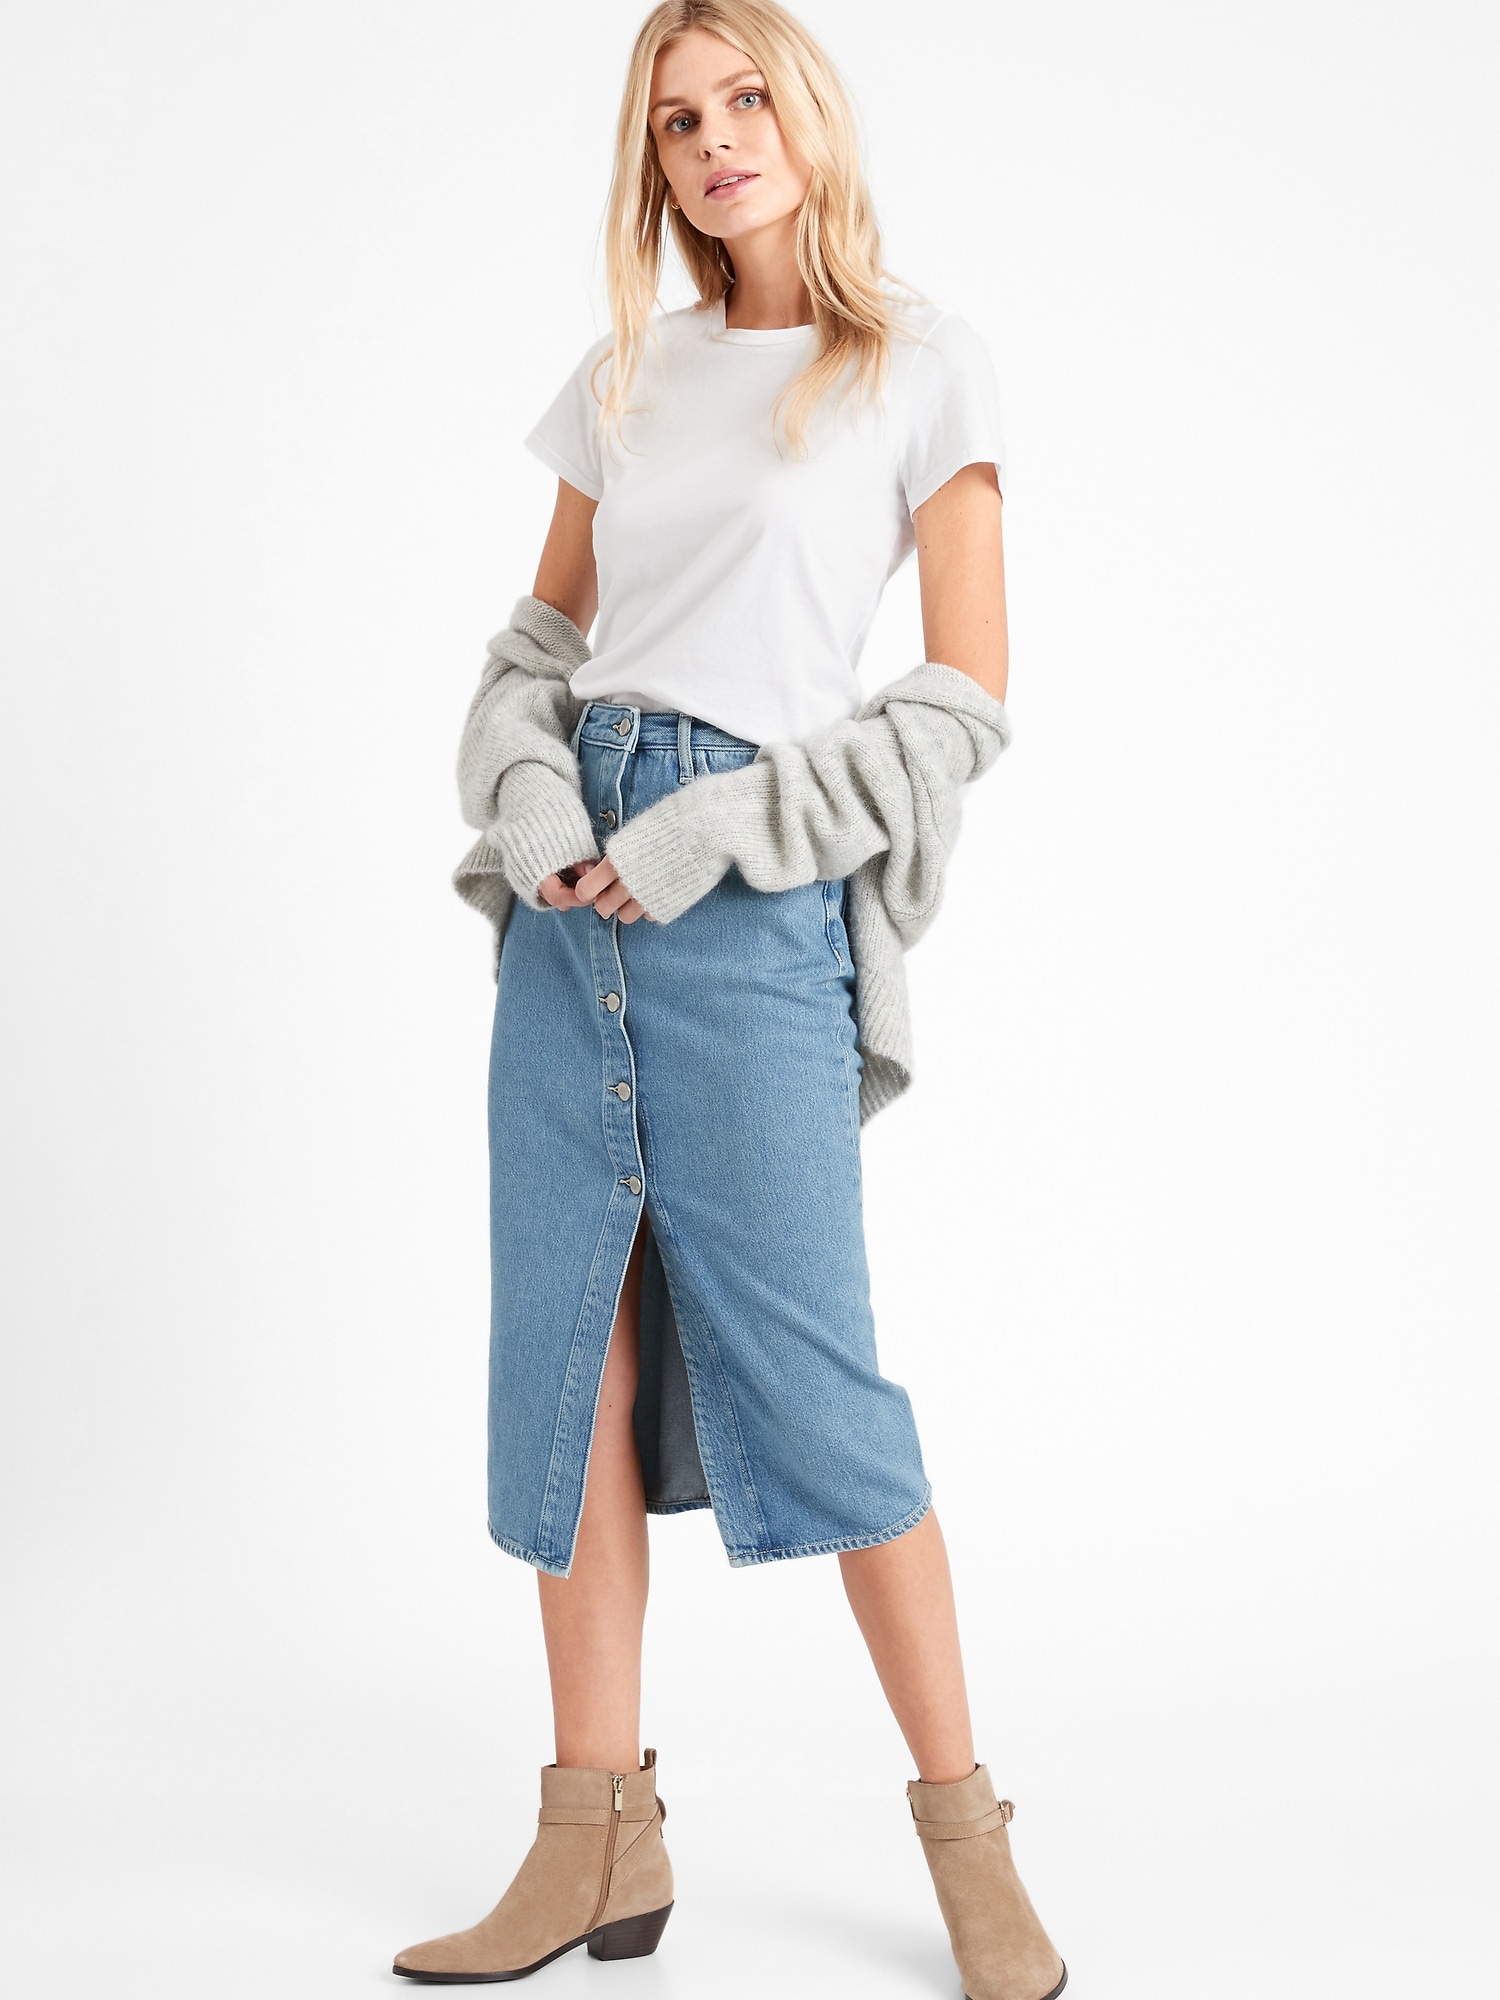 Petite Studio's Pippa Denim Skirt - Women's Fashion